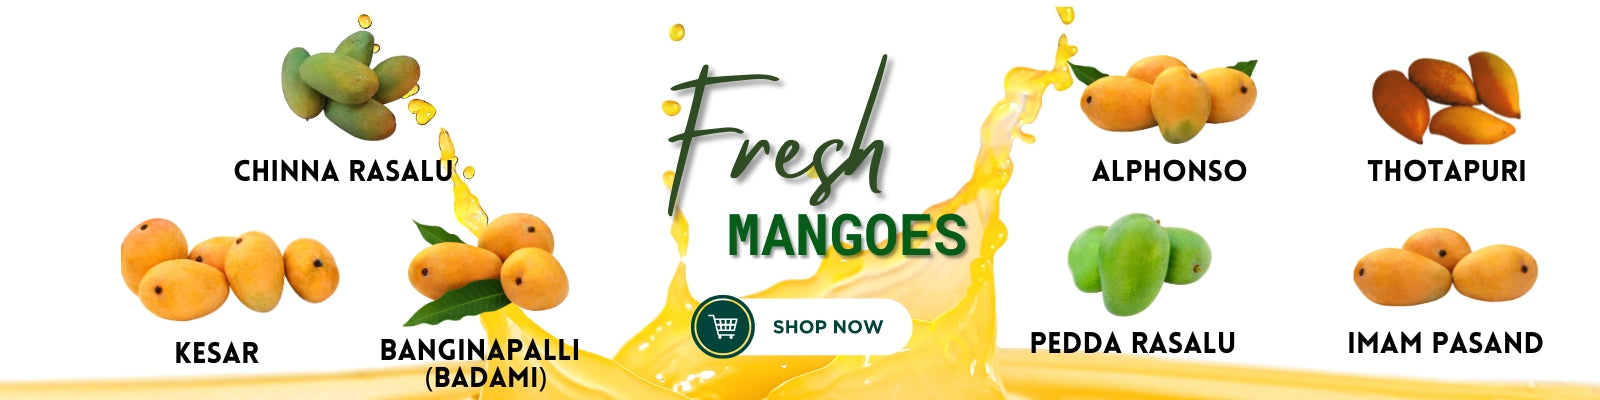 Mango slider 2